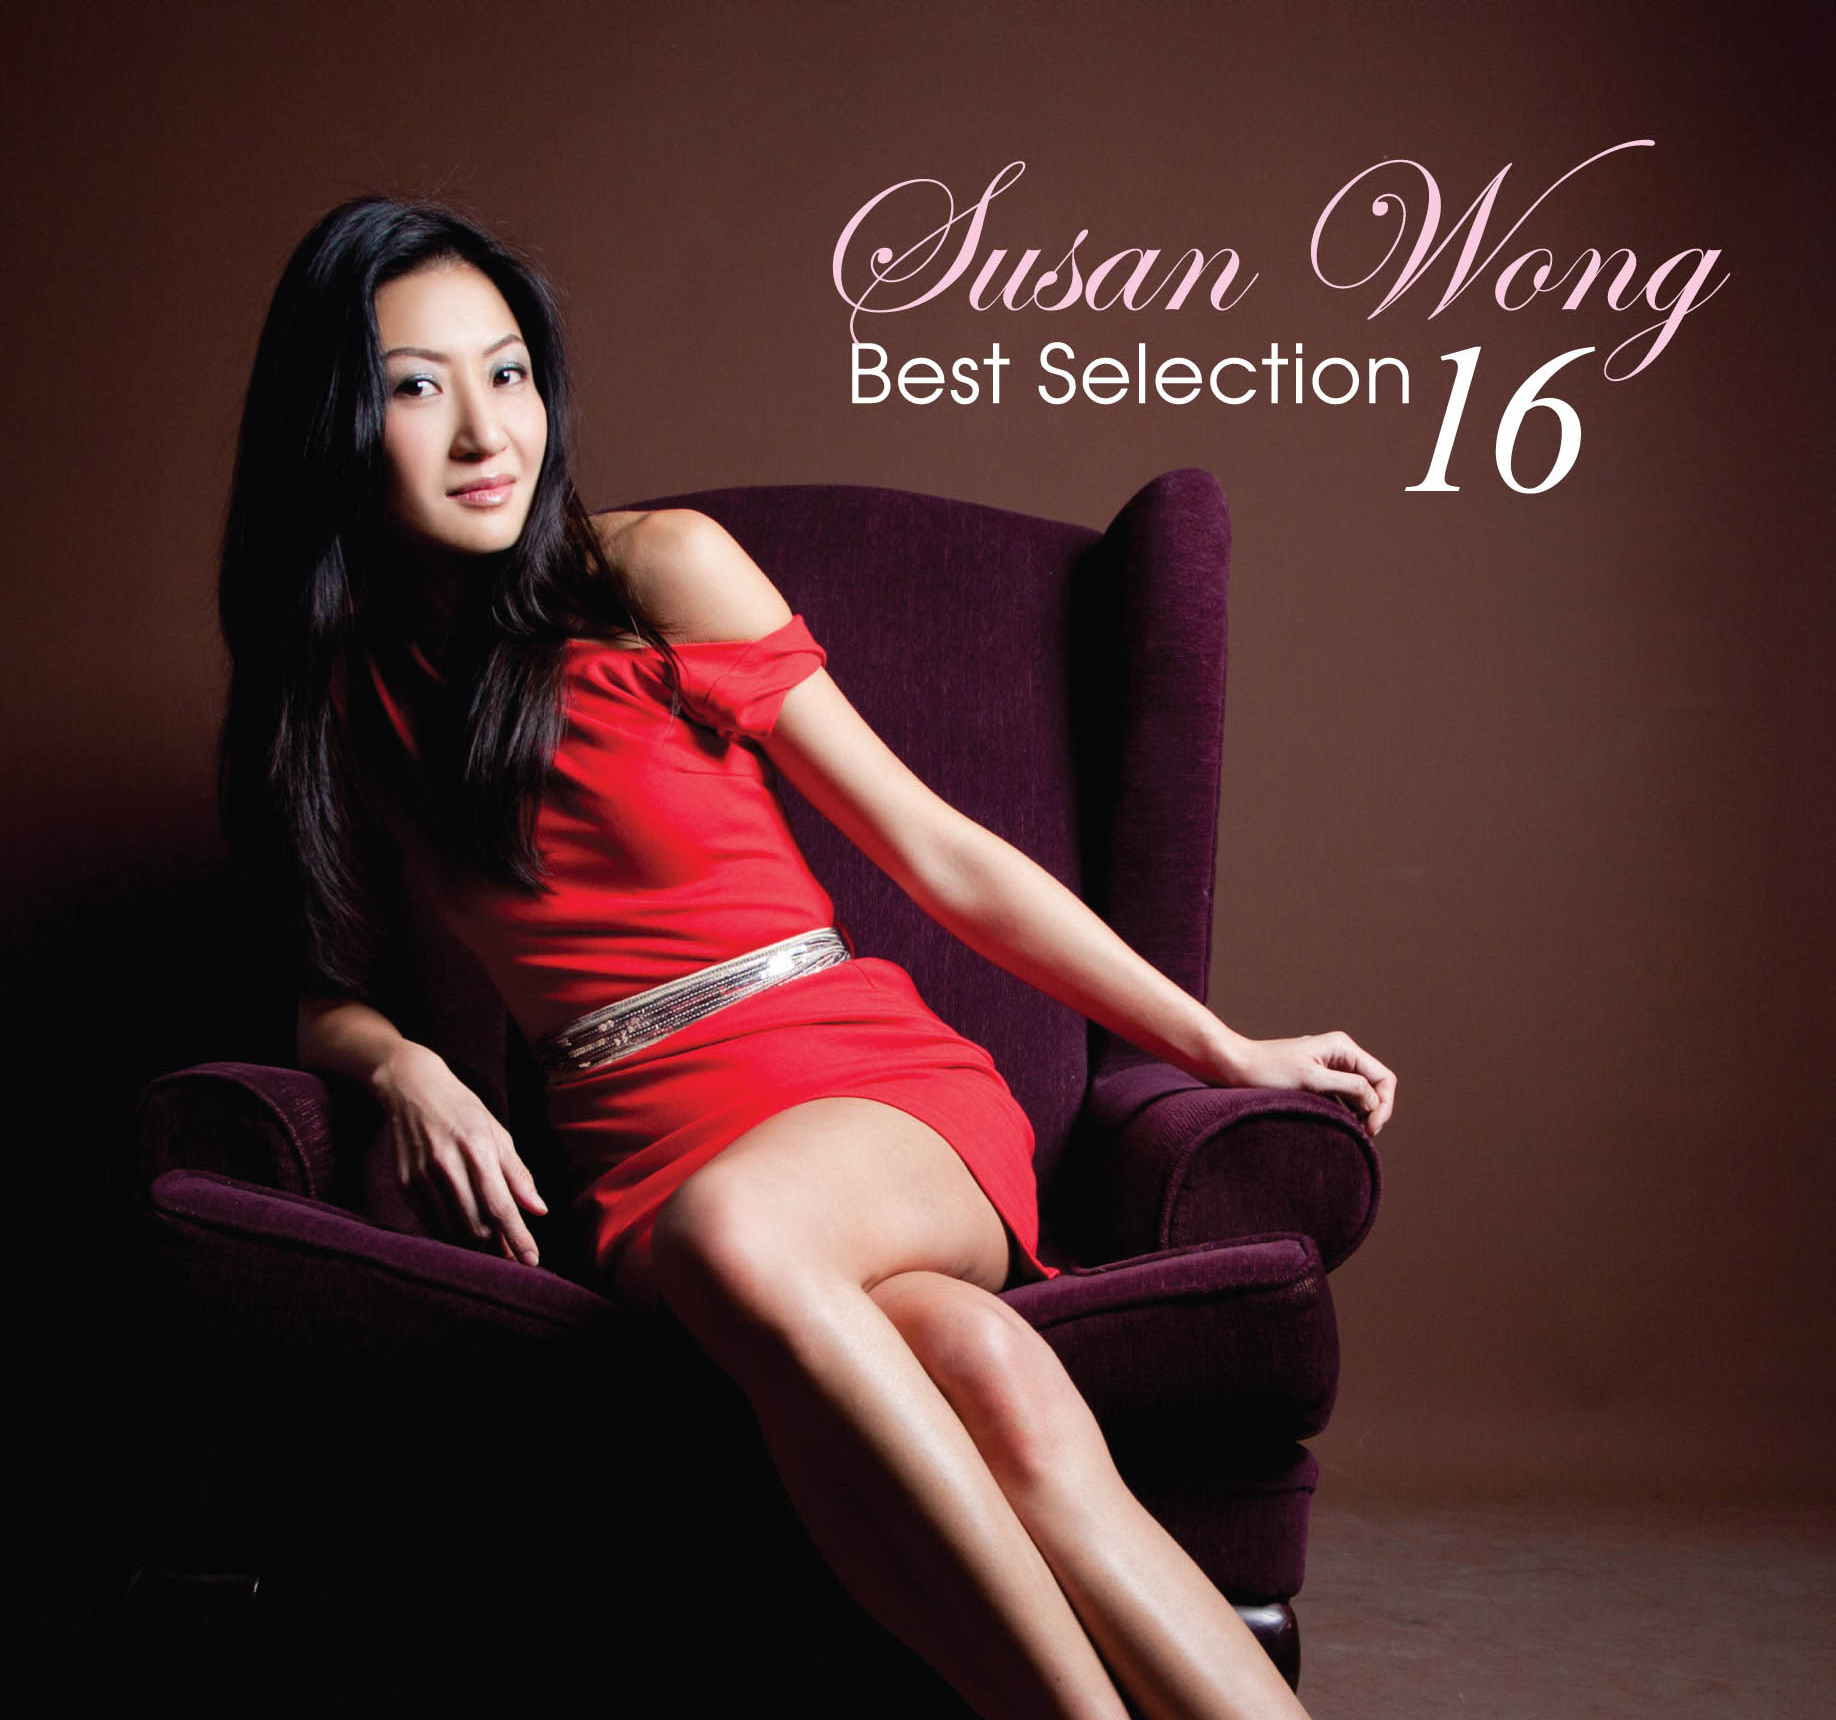 Susan Wong (黃翠珊) - Best Selection 16 (2011/2012) SACD ISO